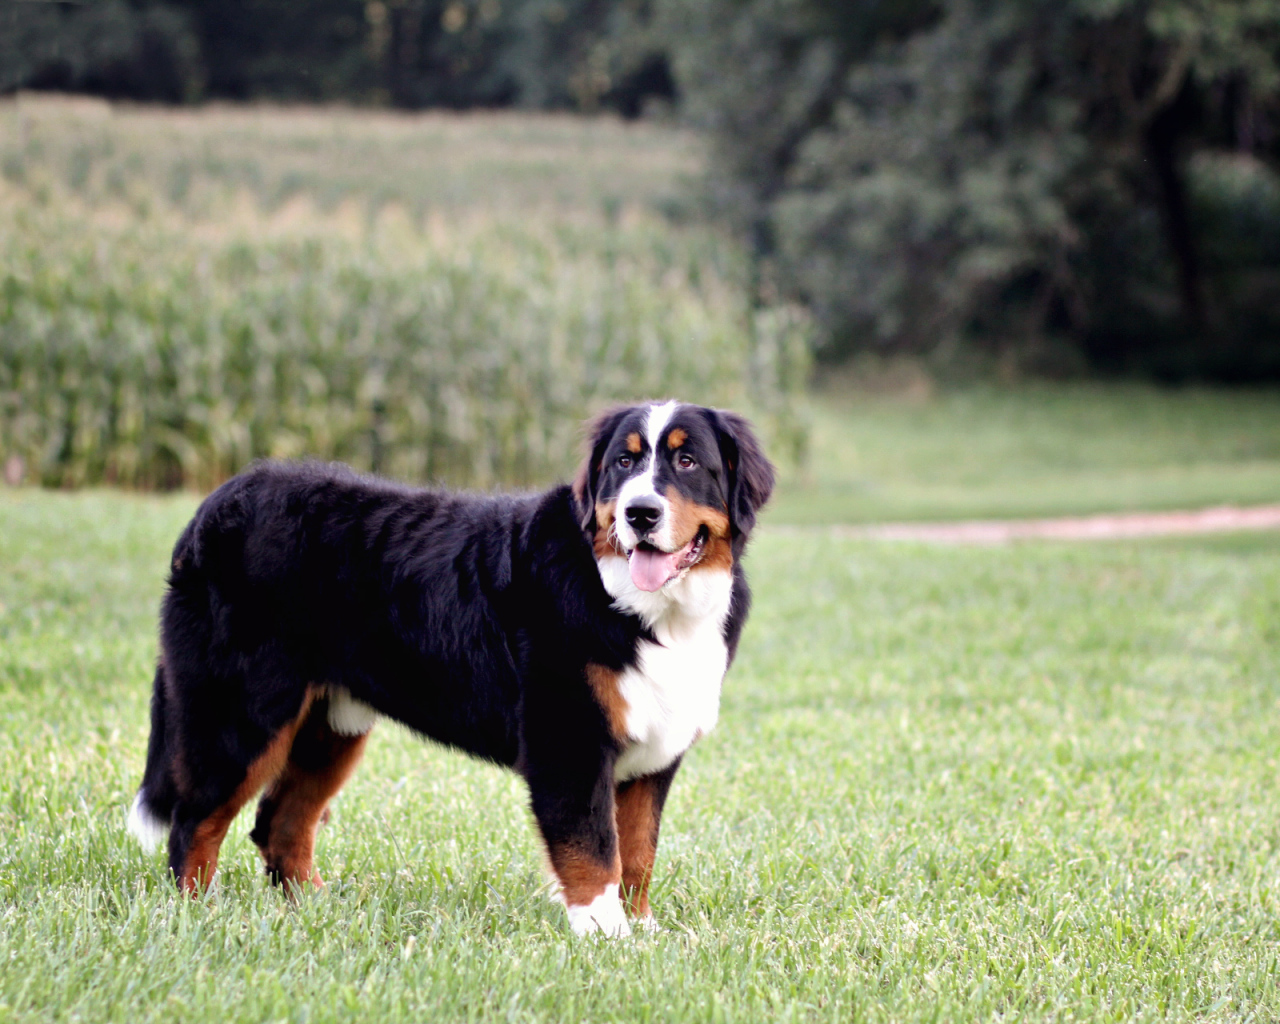 Bernese Mountain Dog posing in the field